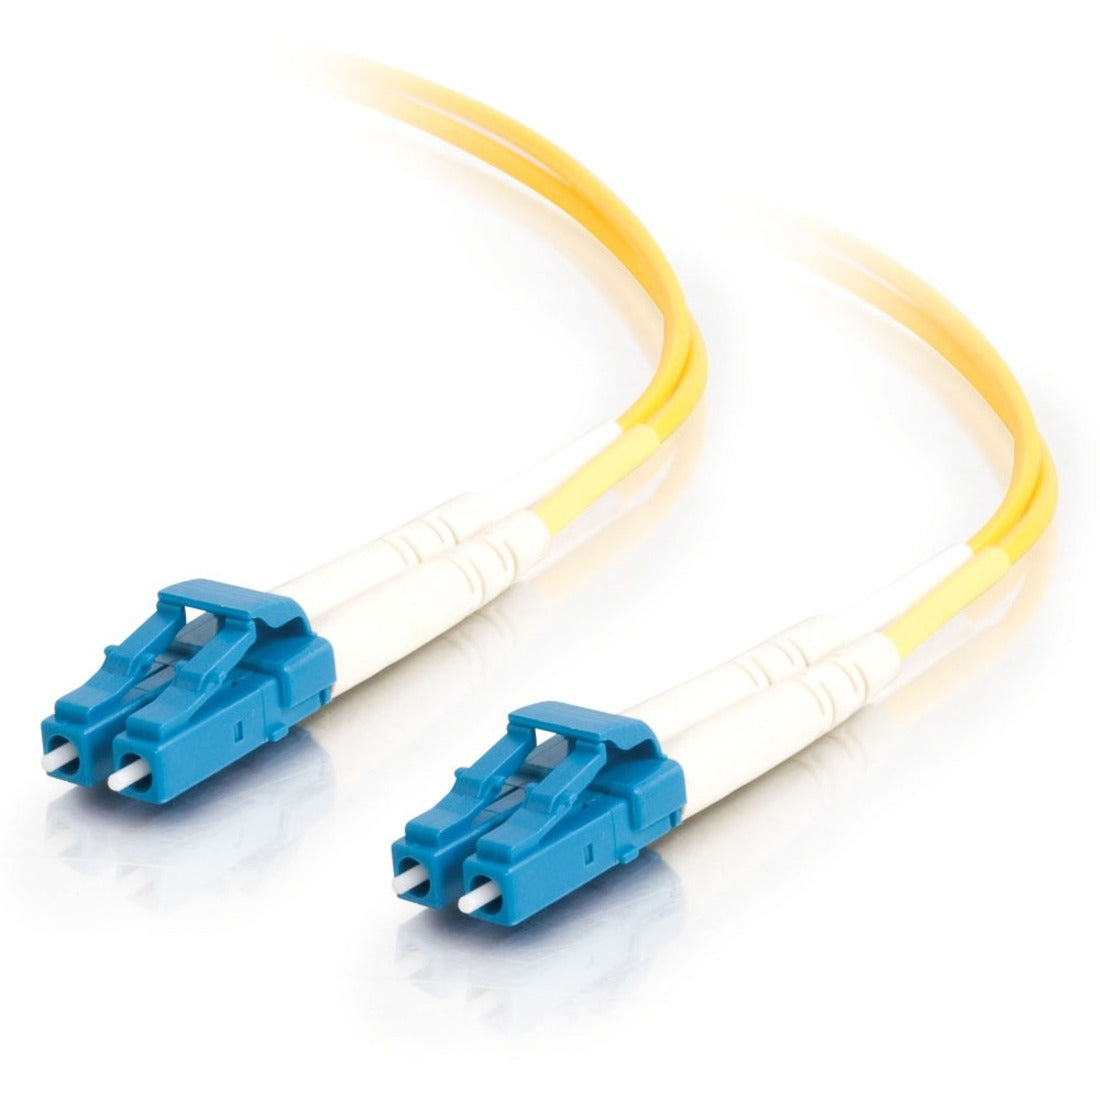 C2G 28758 3m LC-LC 9/125 OS2 双绞线单模光纤电缆， 黄色 品牌名称: C2G C2G 翻译: C2G